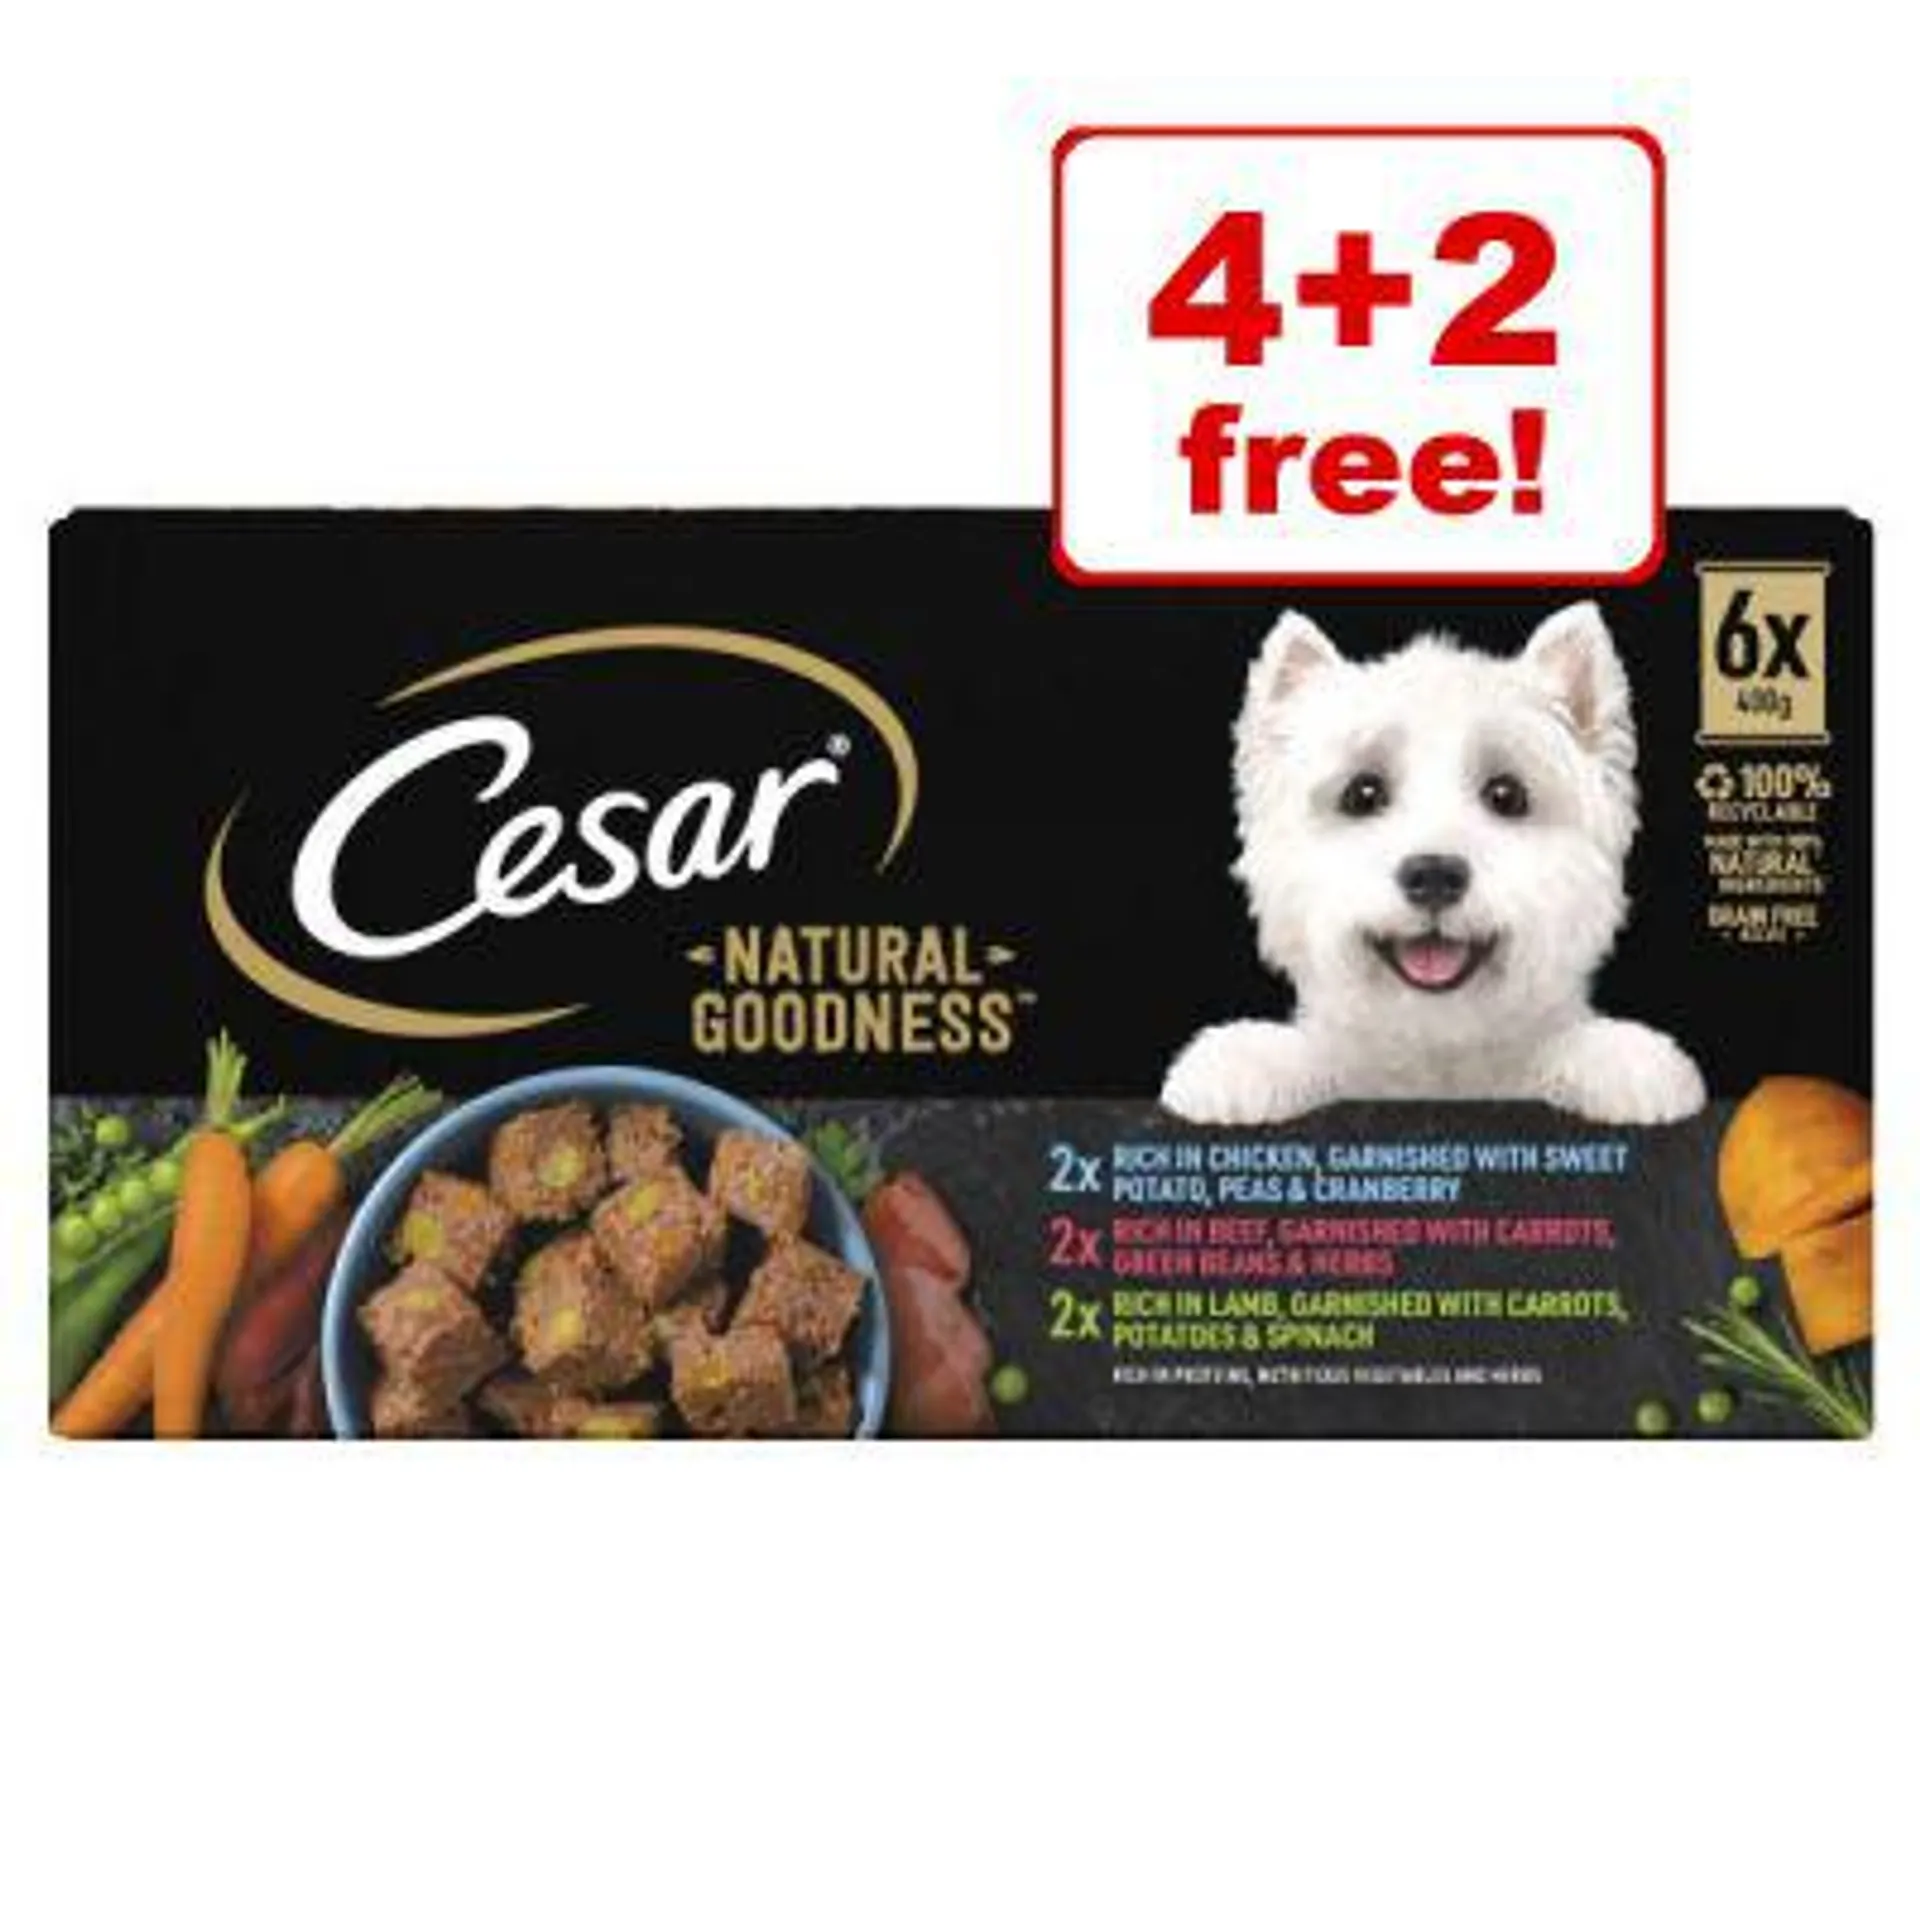 6 x 400g Cesar Natural Goodness Wet Dog Food - 4 + 2 Free!*